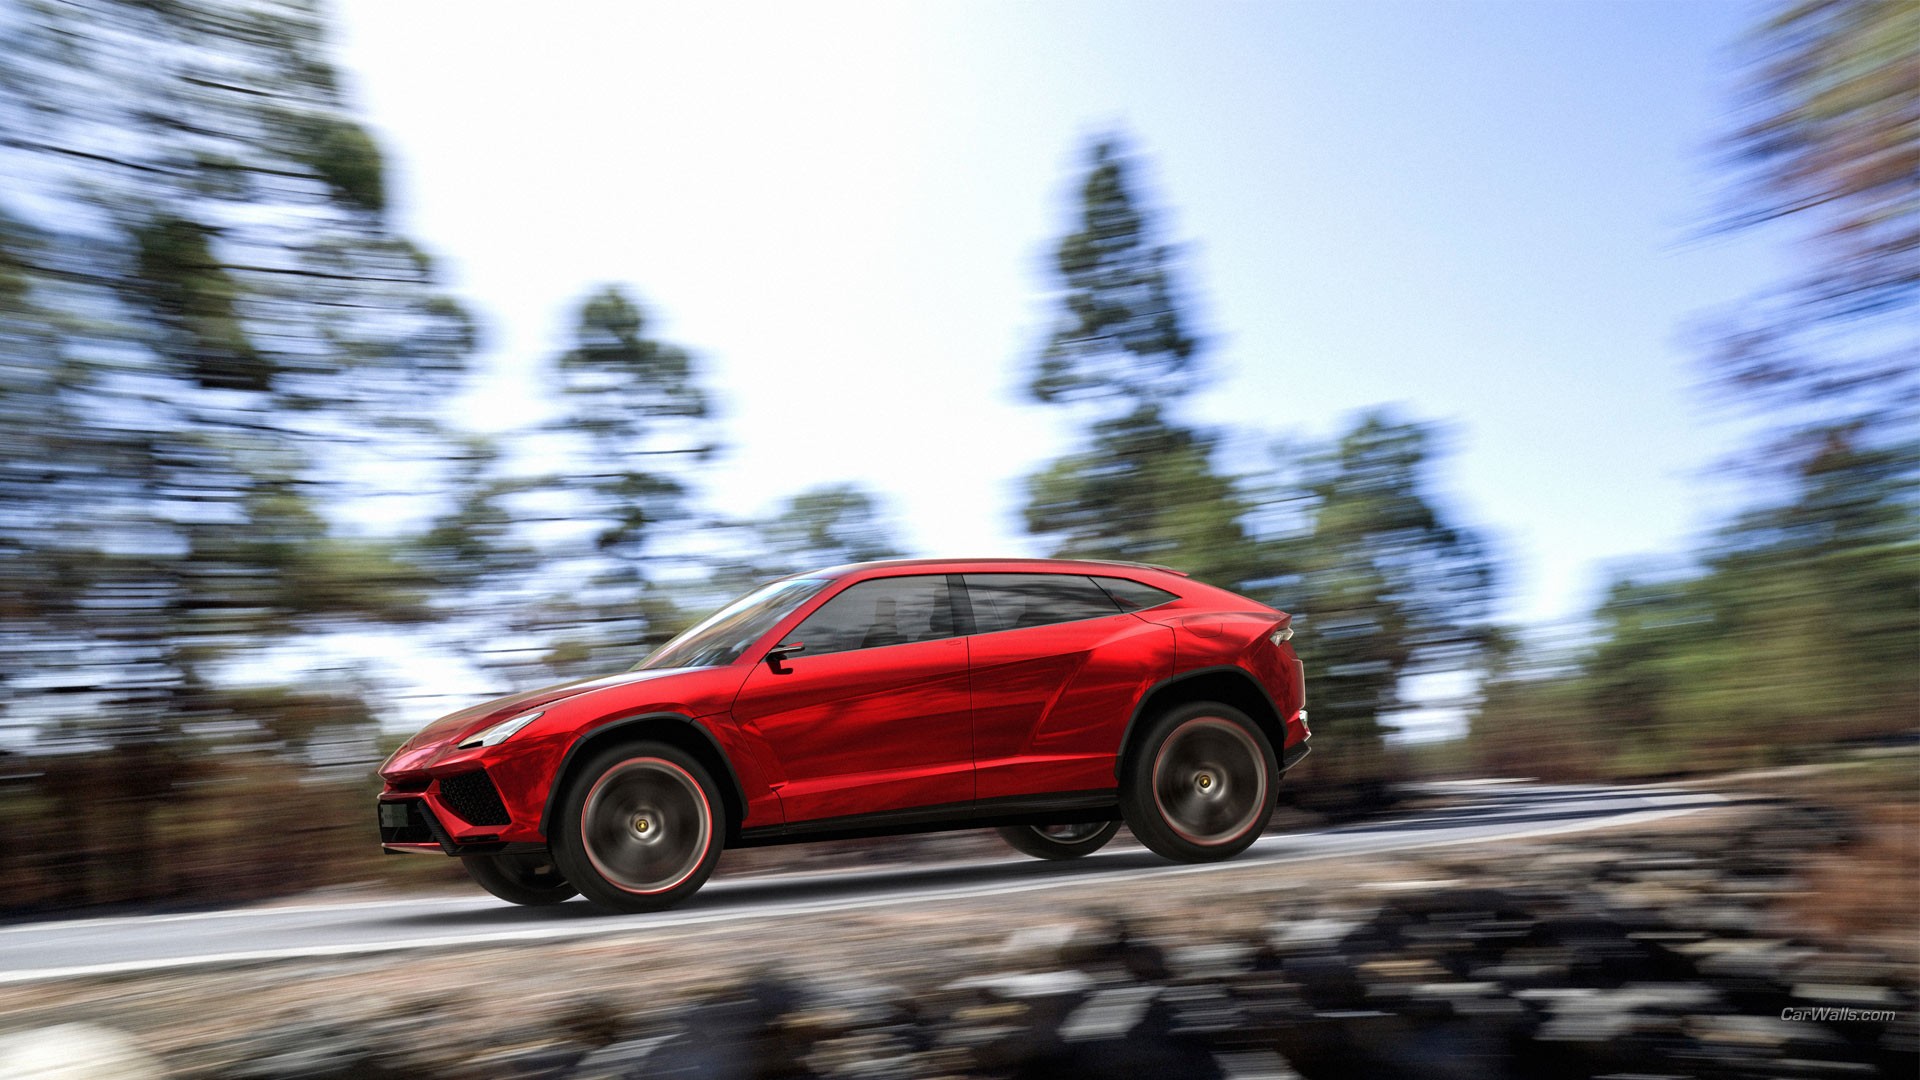 Lamborghini Urus, Concept Cars, Red Cars, Motion Blur Wallpaper